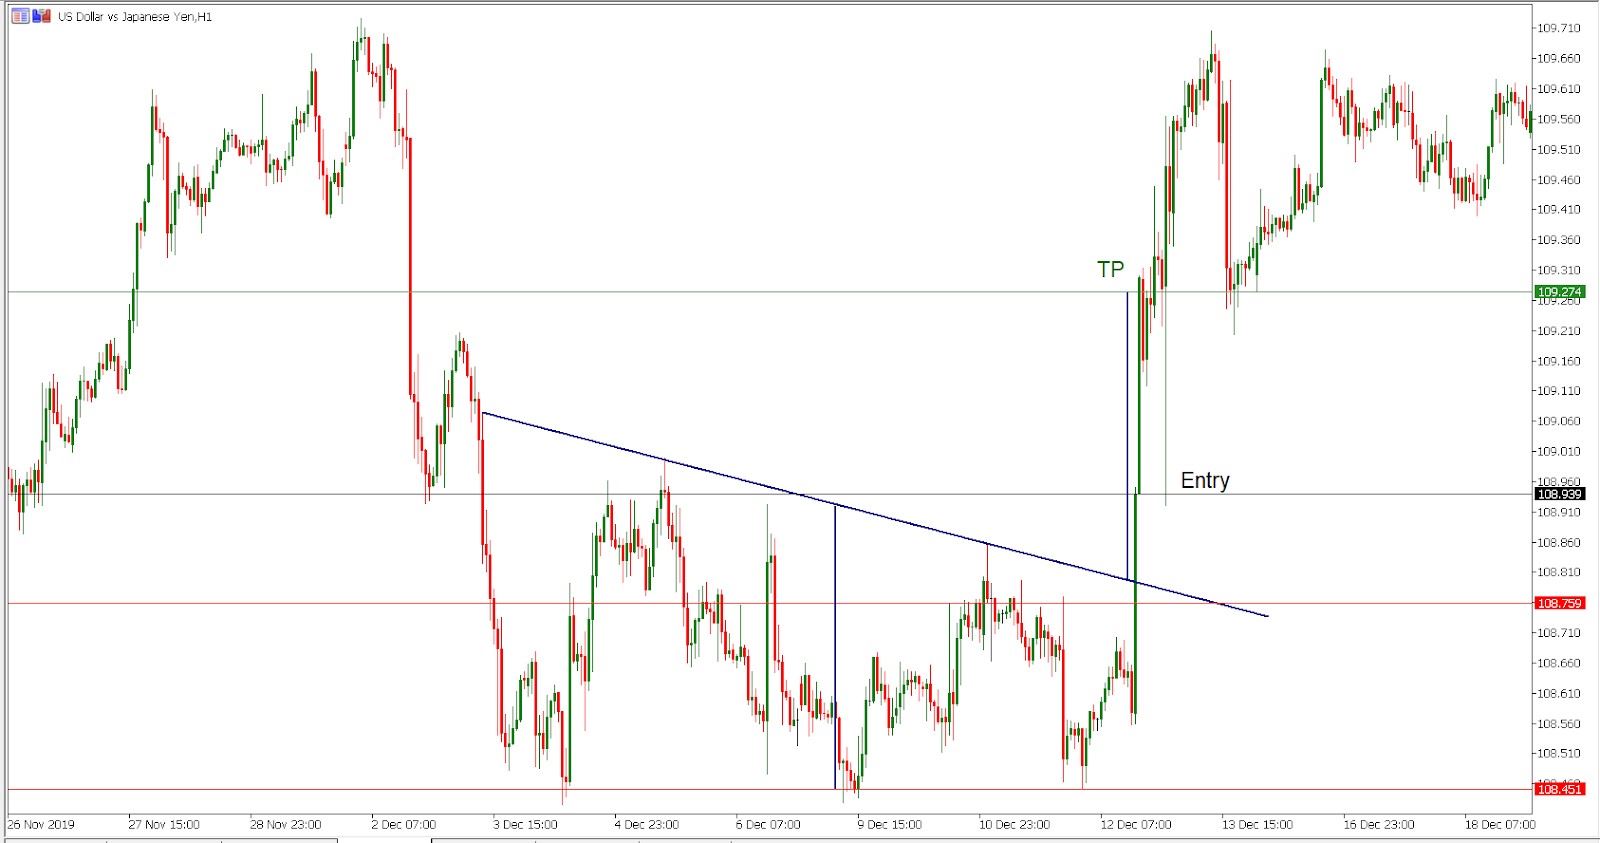 USD/JPY H1 chart - Trading the triple bottom pattern